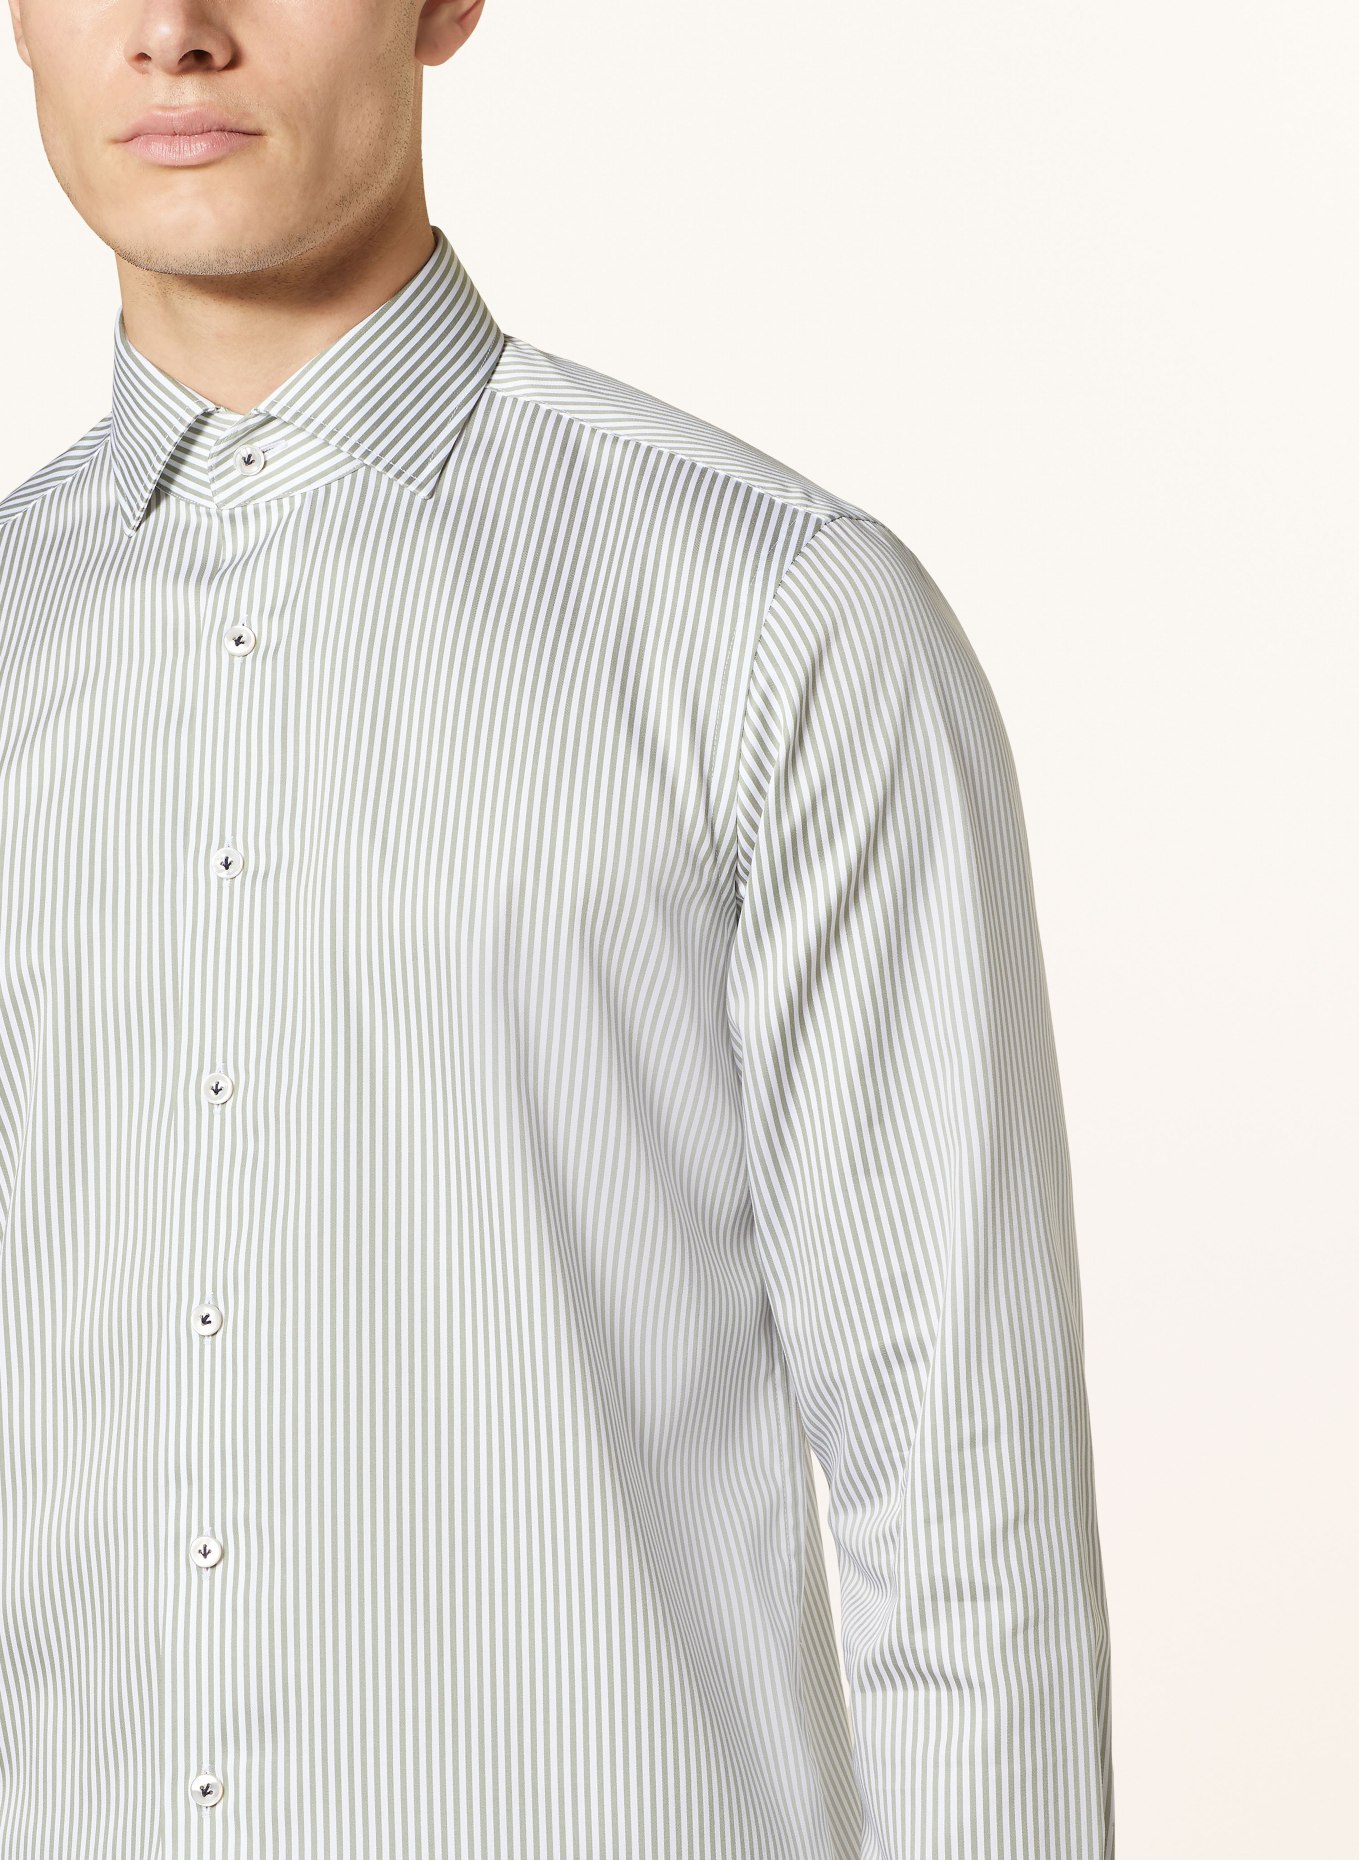 OLYMP SIGNATURE Hemd tailored fit, Farbe: HELLGRÜN/ WEISS (Bild 4)